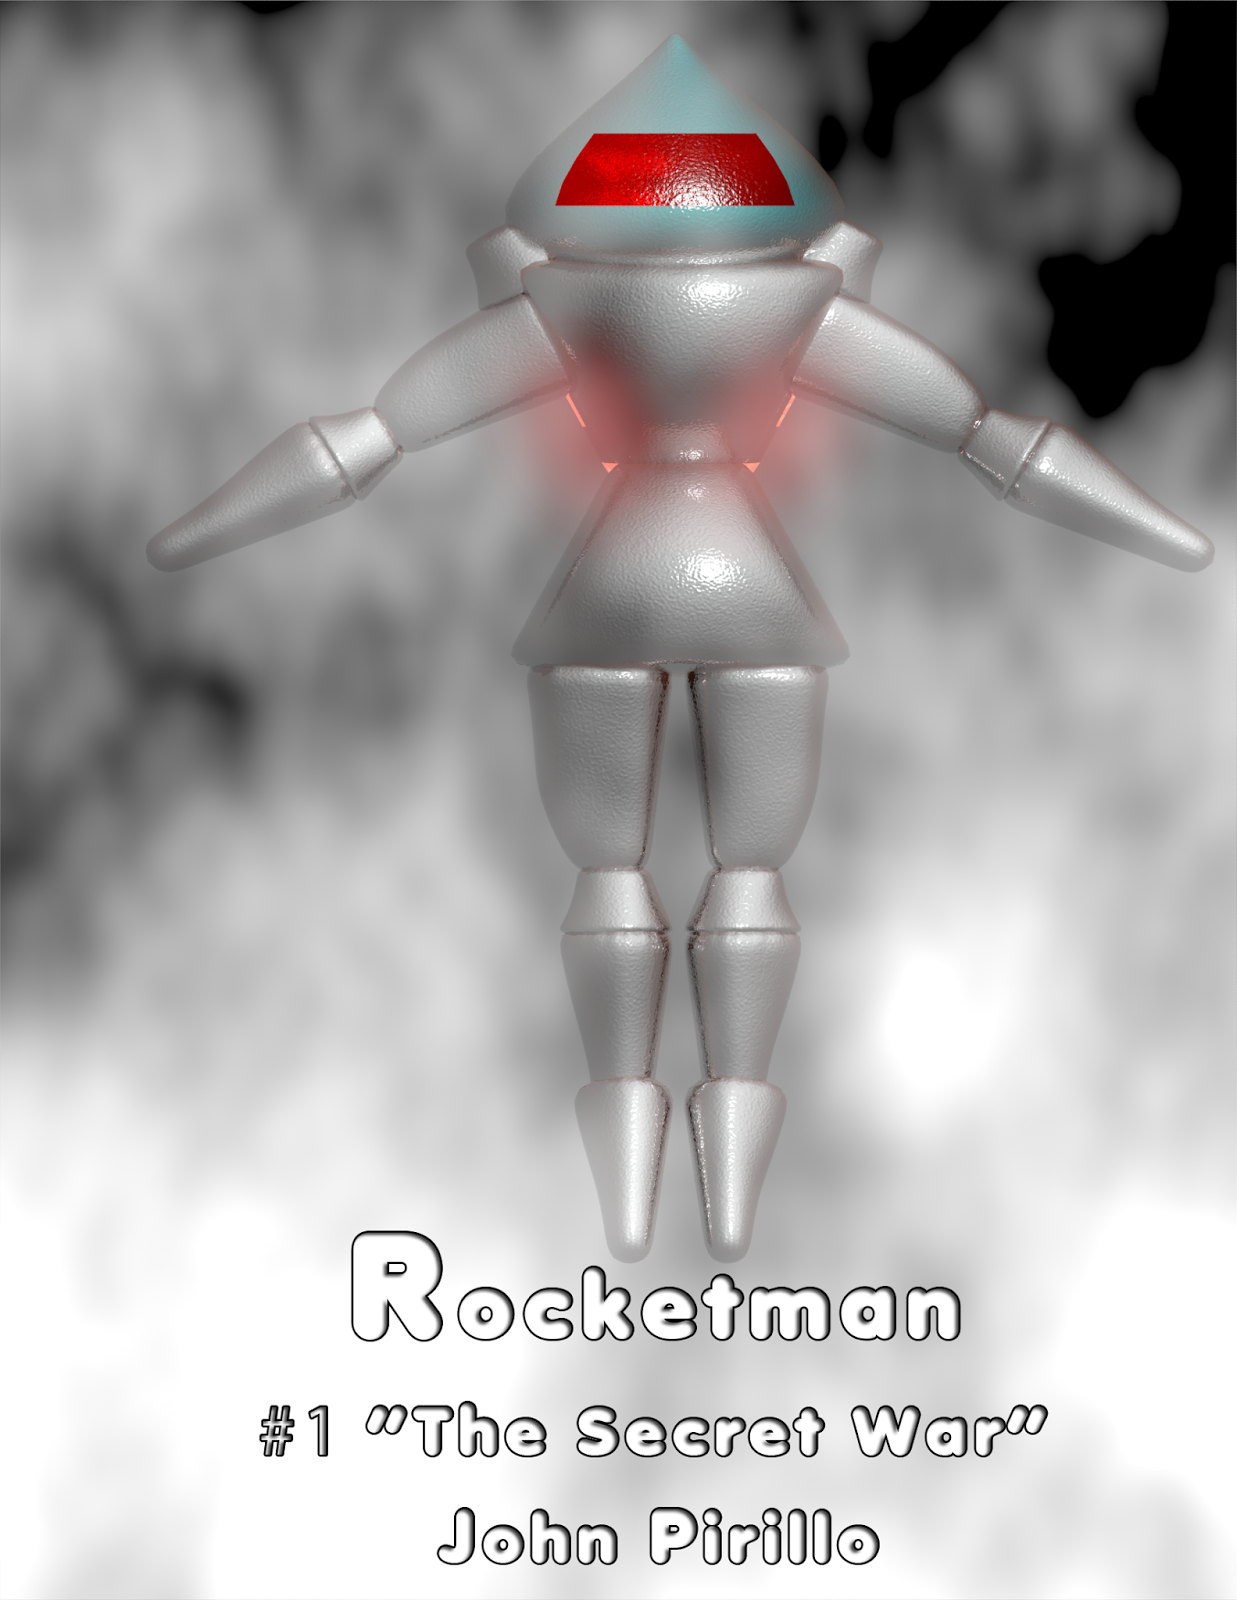 Rocketman " The Secret War" by John Pirillo